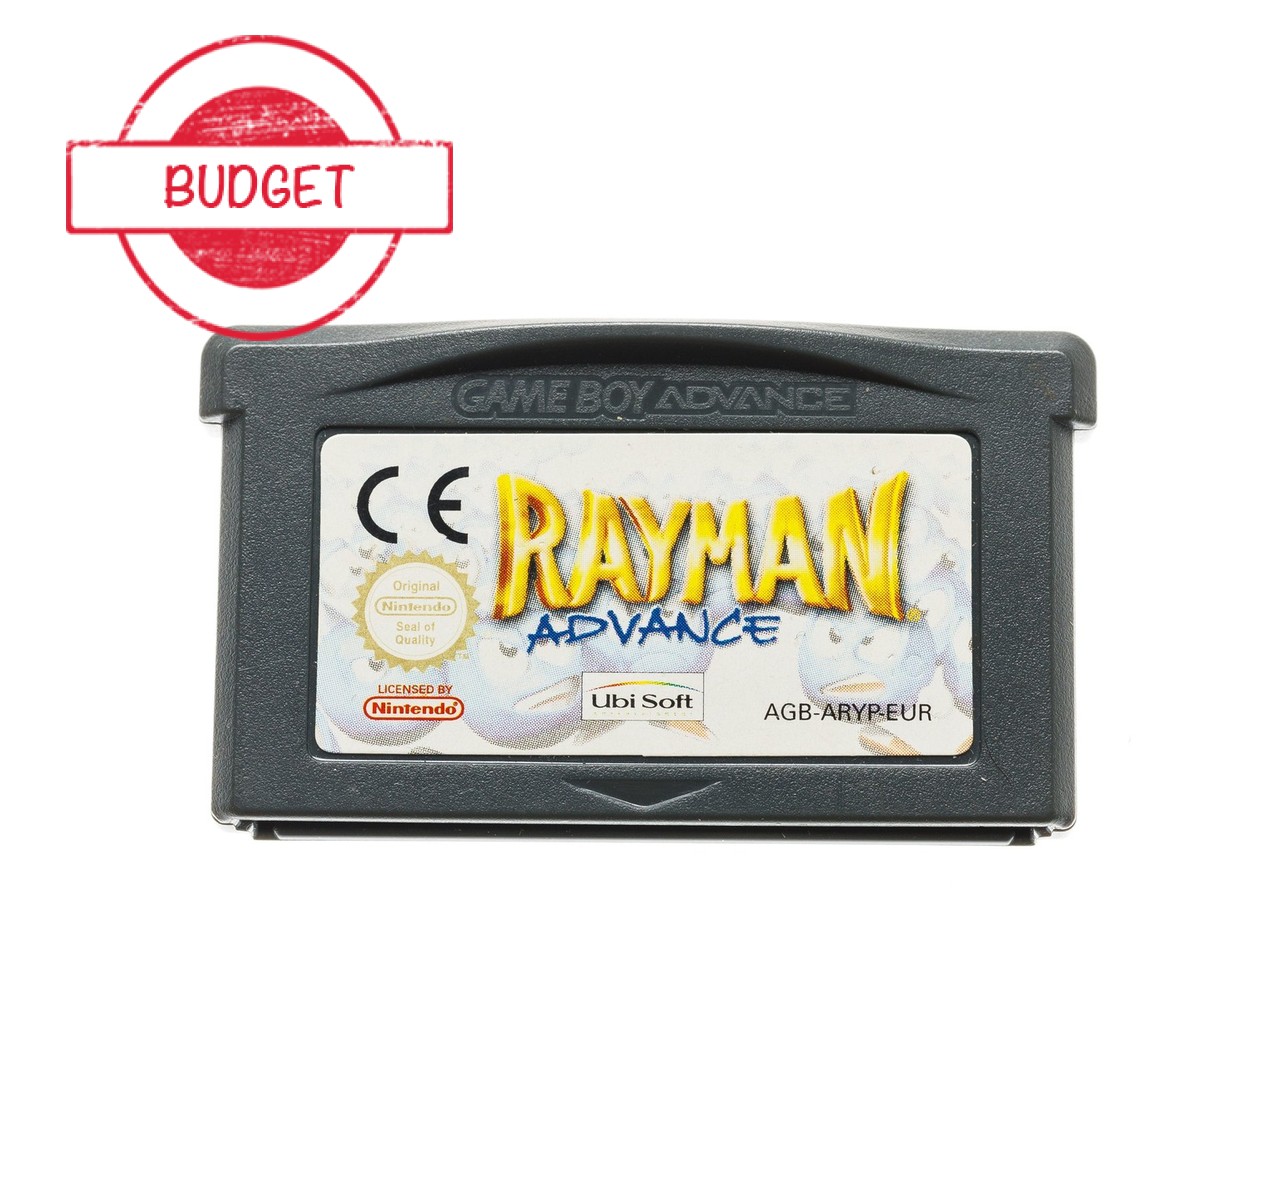 Rayman Advance - Budget Kopen | Gameboy Advance Games